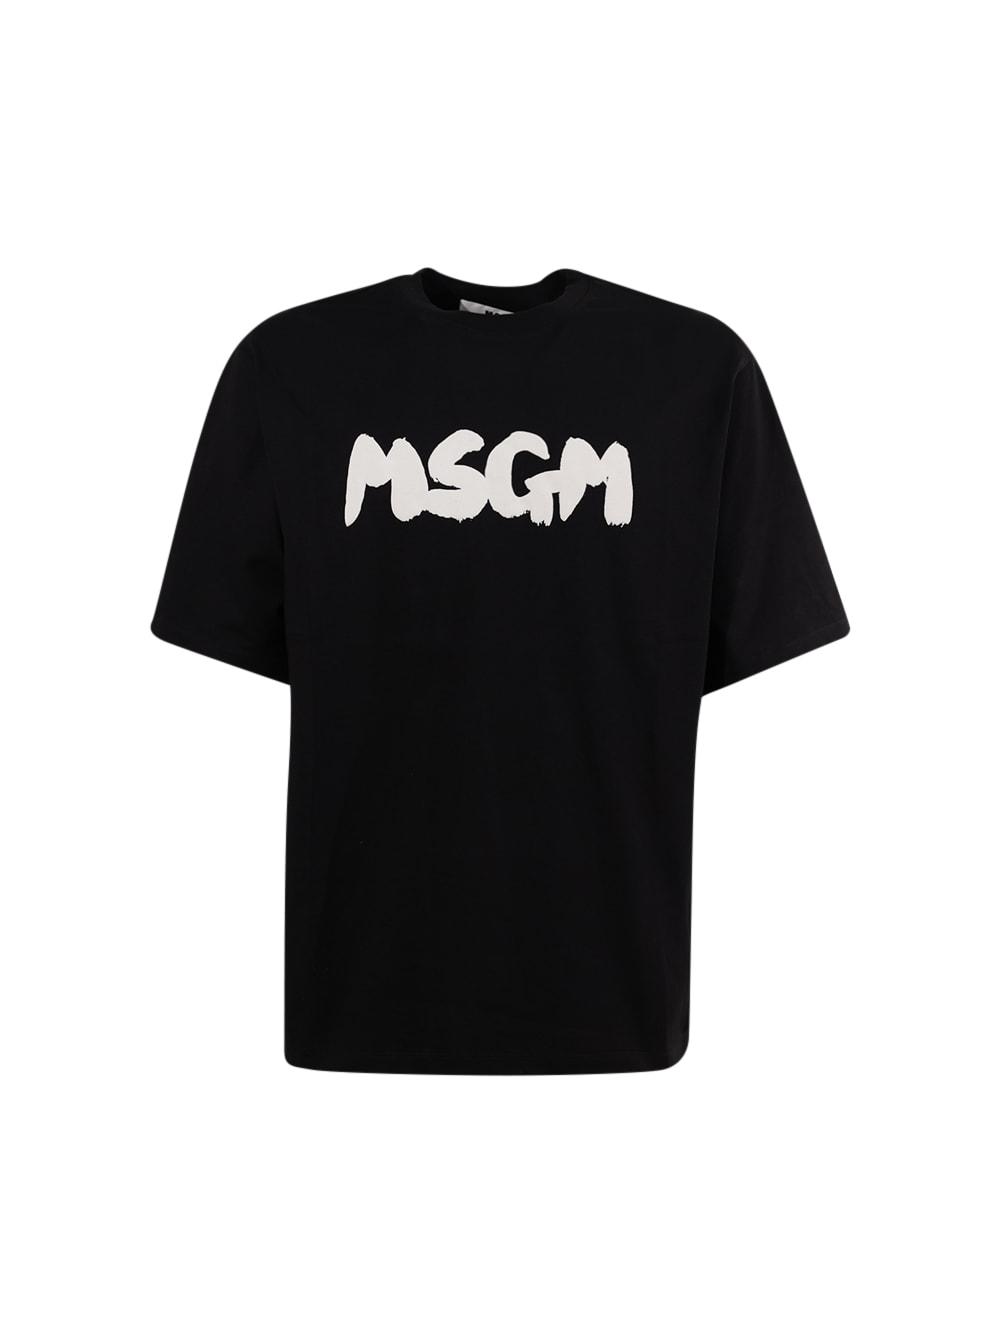 MSGM Short Sleeve Crew Neck T-shirt